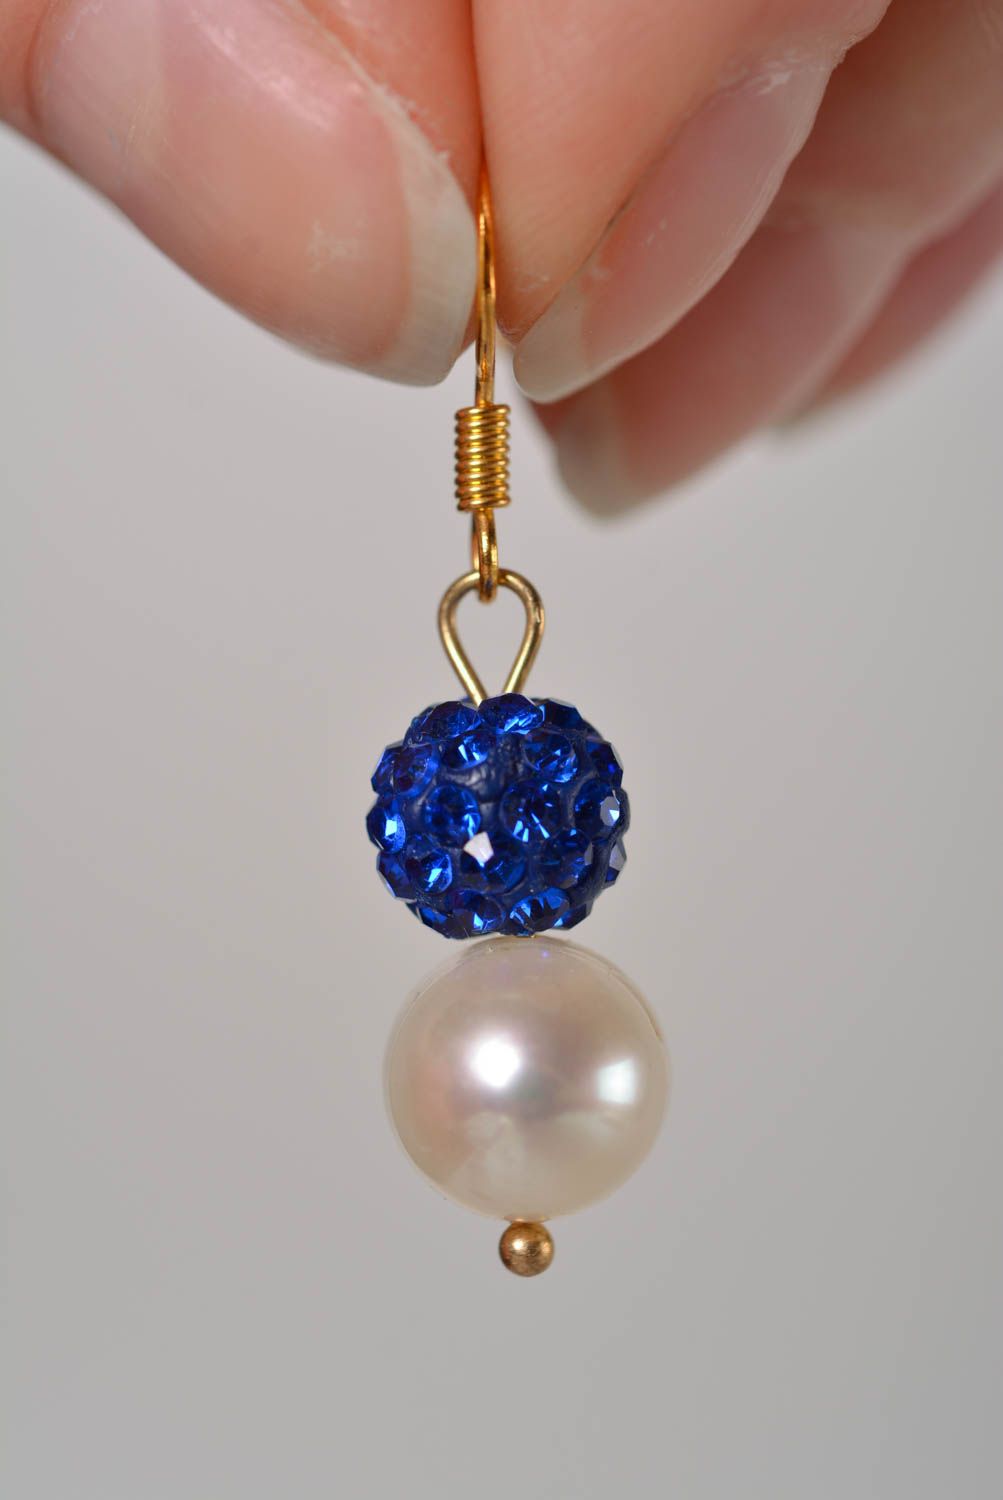 Dangling earrings pearl earrings handmade jewellery women accessories cool gifts photo 3